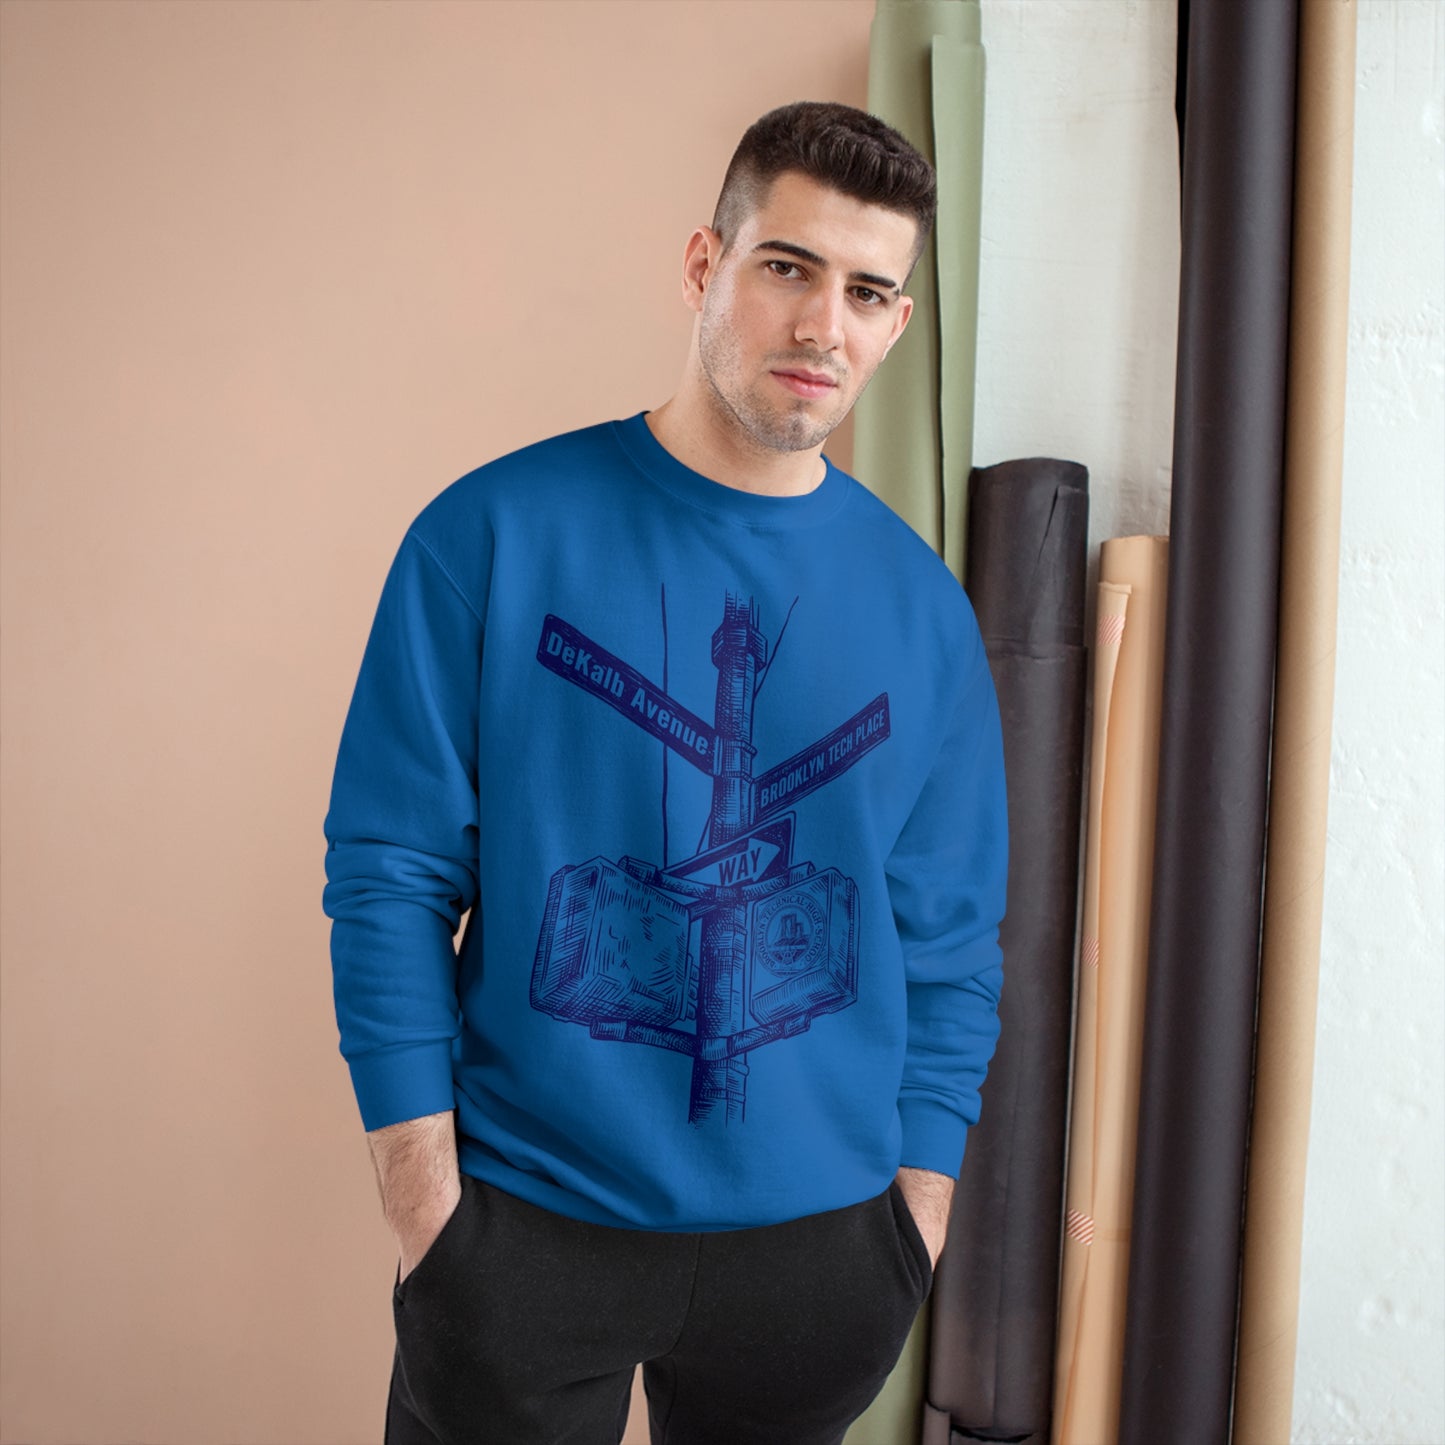 Boutique - Dekalb Ave & Brooklyn Tech Pl - Champion Crewneck Sweatshirt - Navy Graphic